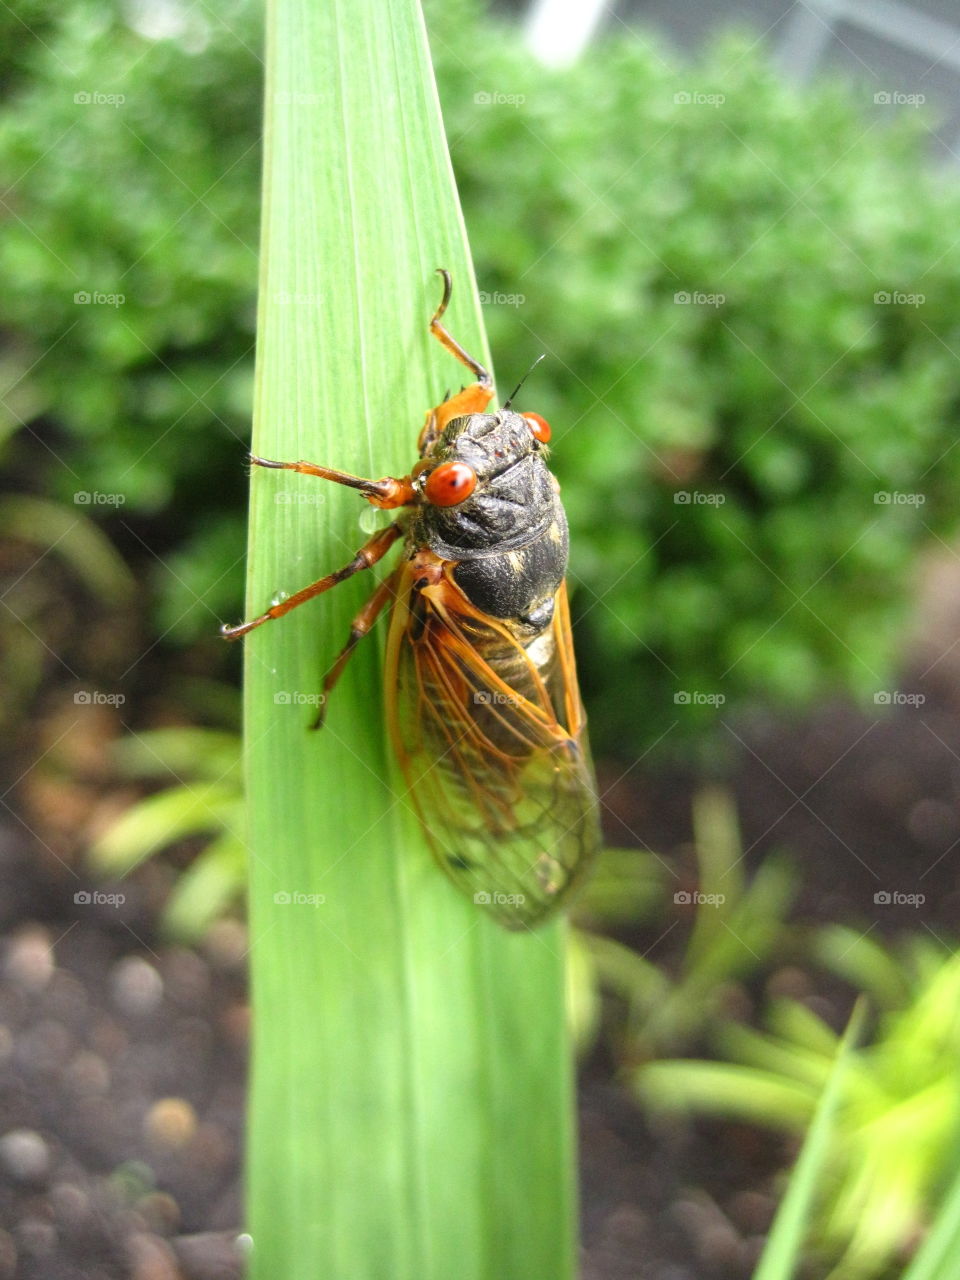 Cicada on leaf. A cicada on a lead